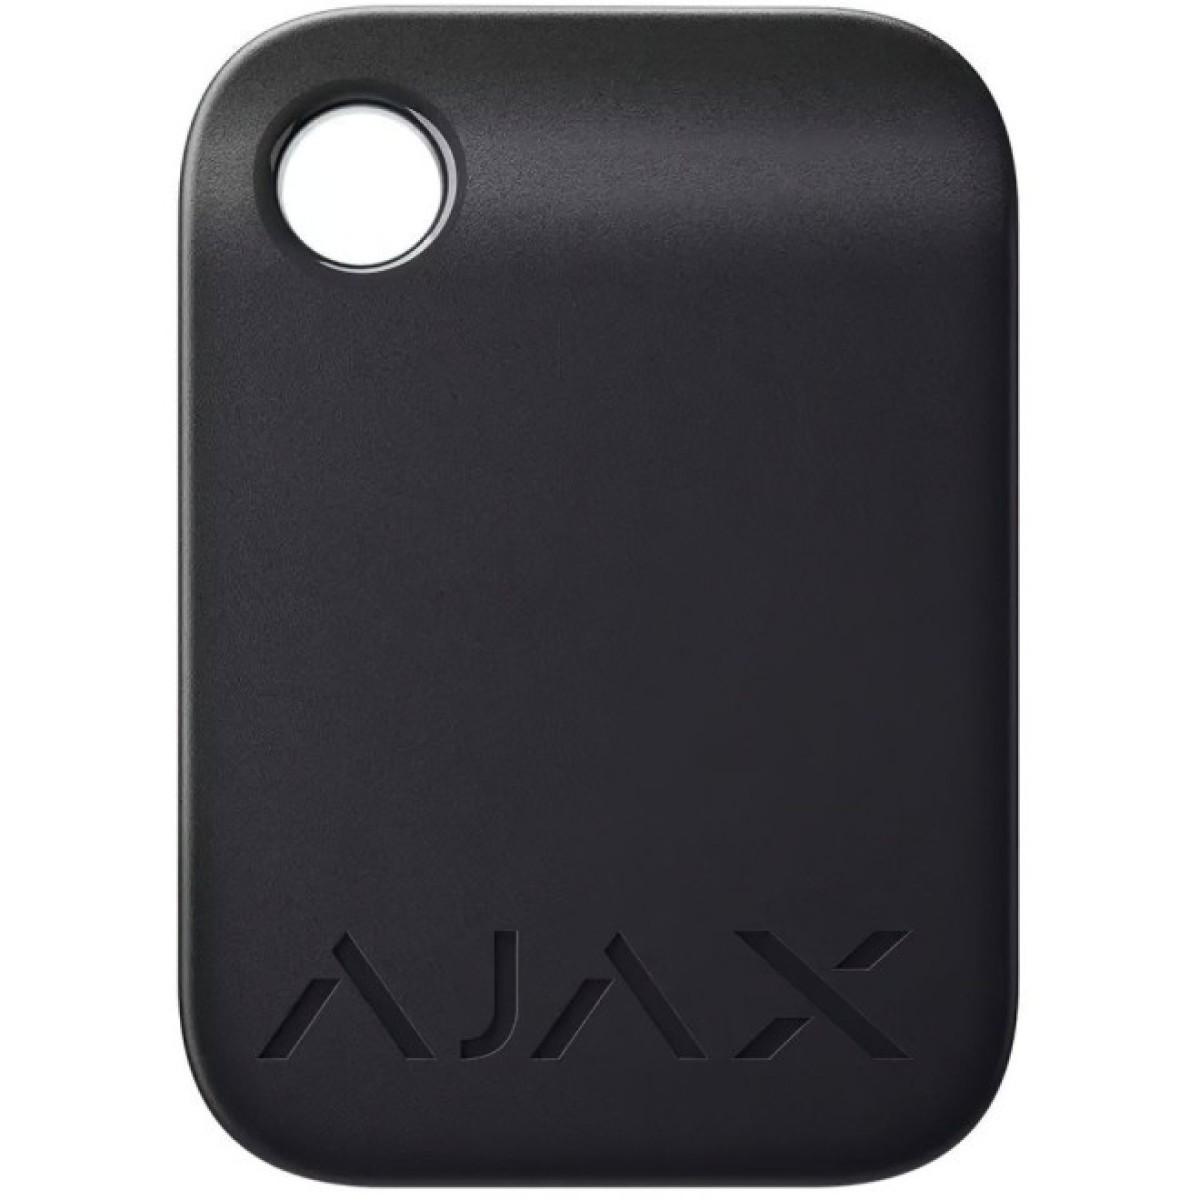 Брелок для охранной системы Ajax Tag Black /10 256_256.jpg